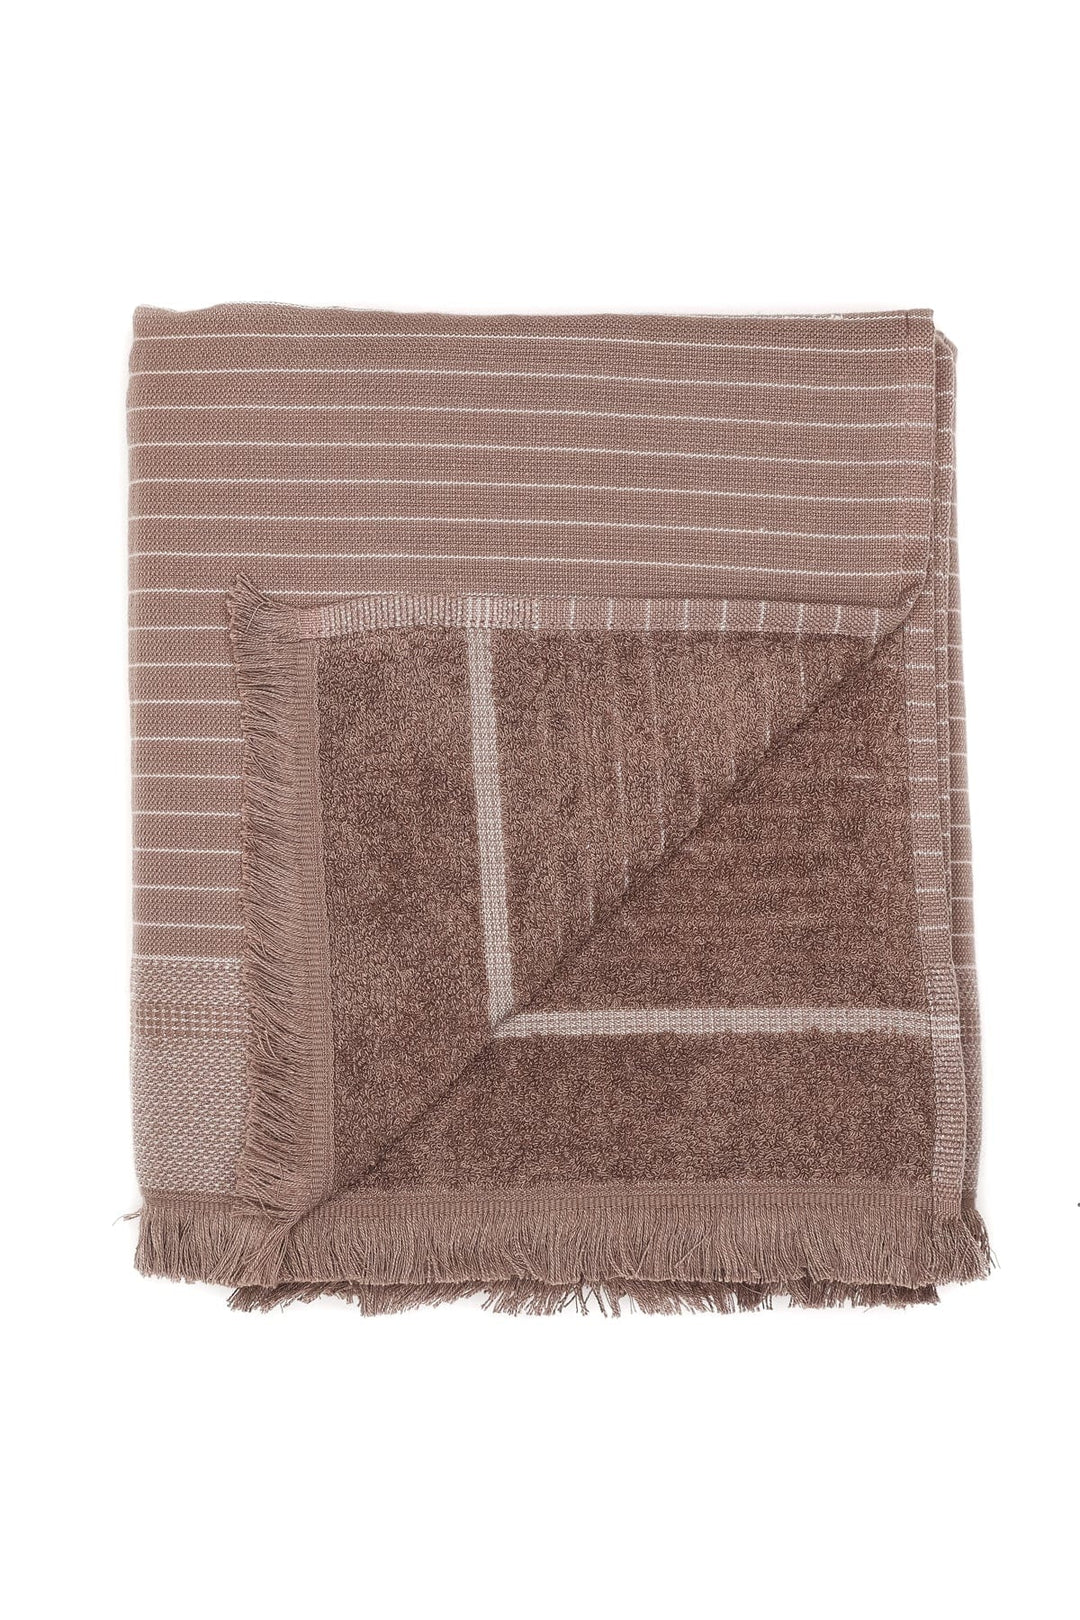 Tofino Towels Towel Tofino Towels | SILAS TOWEL SERIES